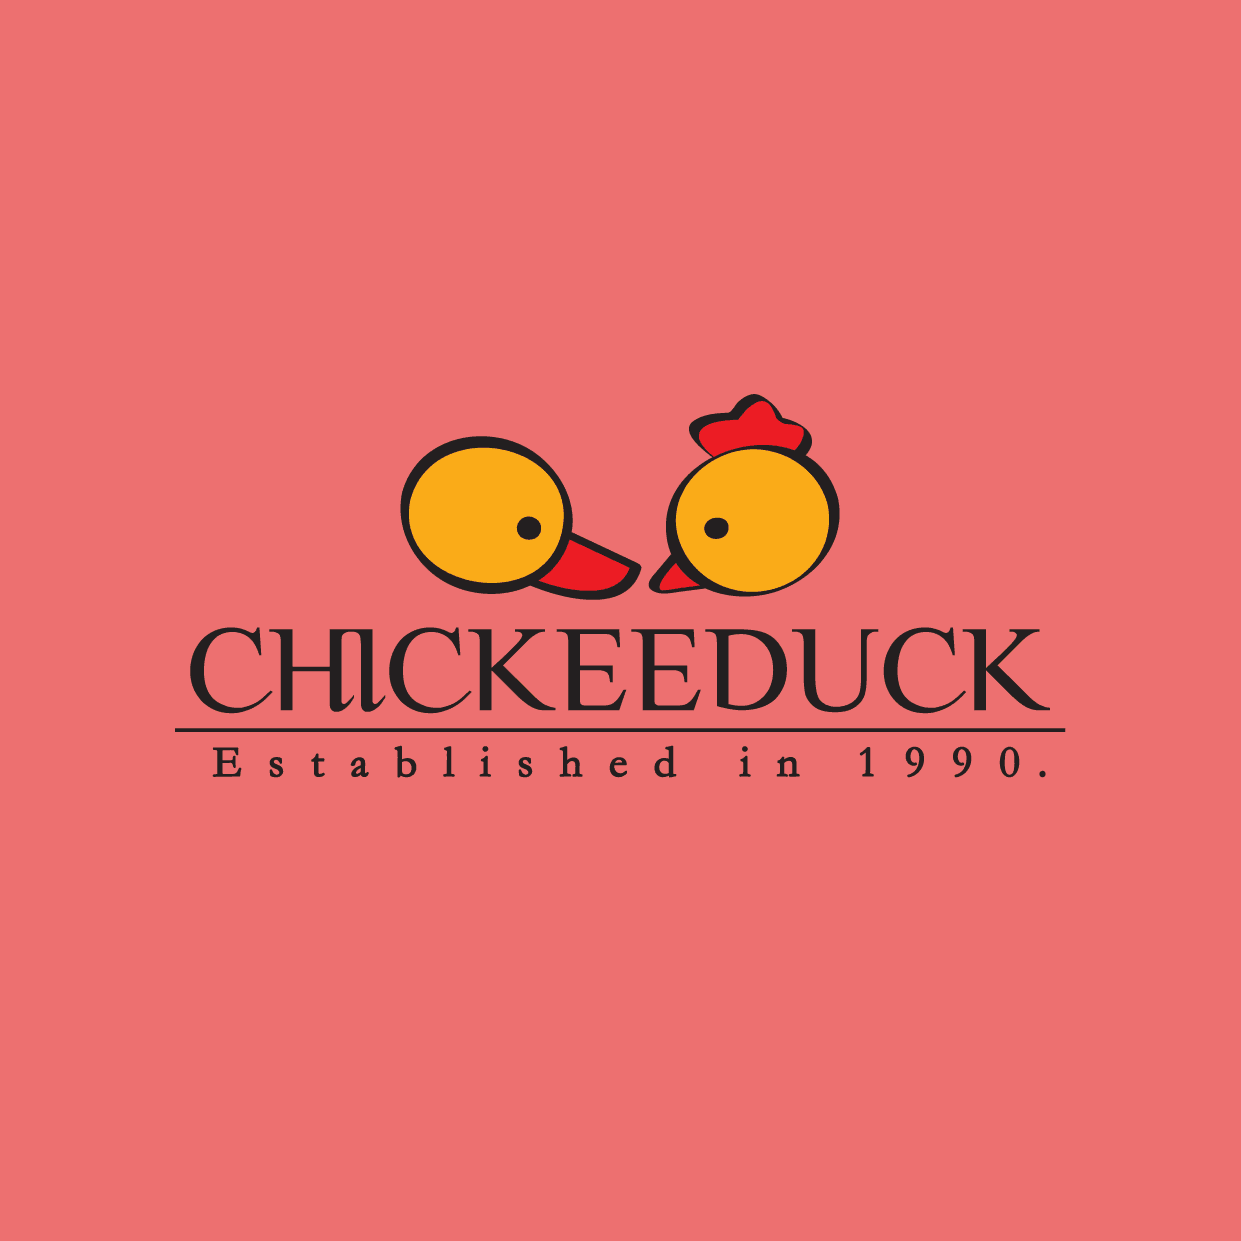 Chickeeduck Logo #020